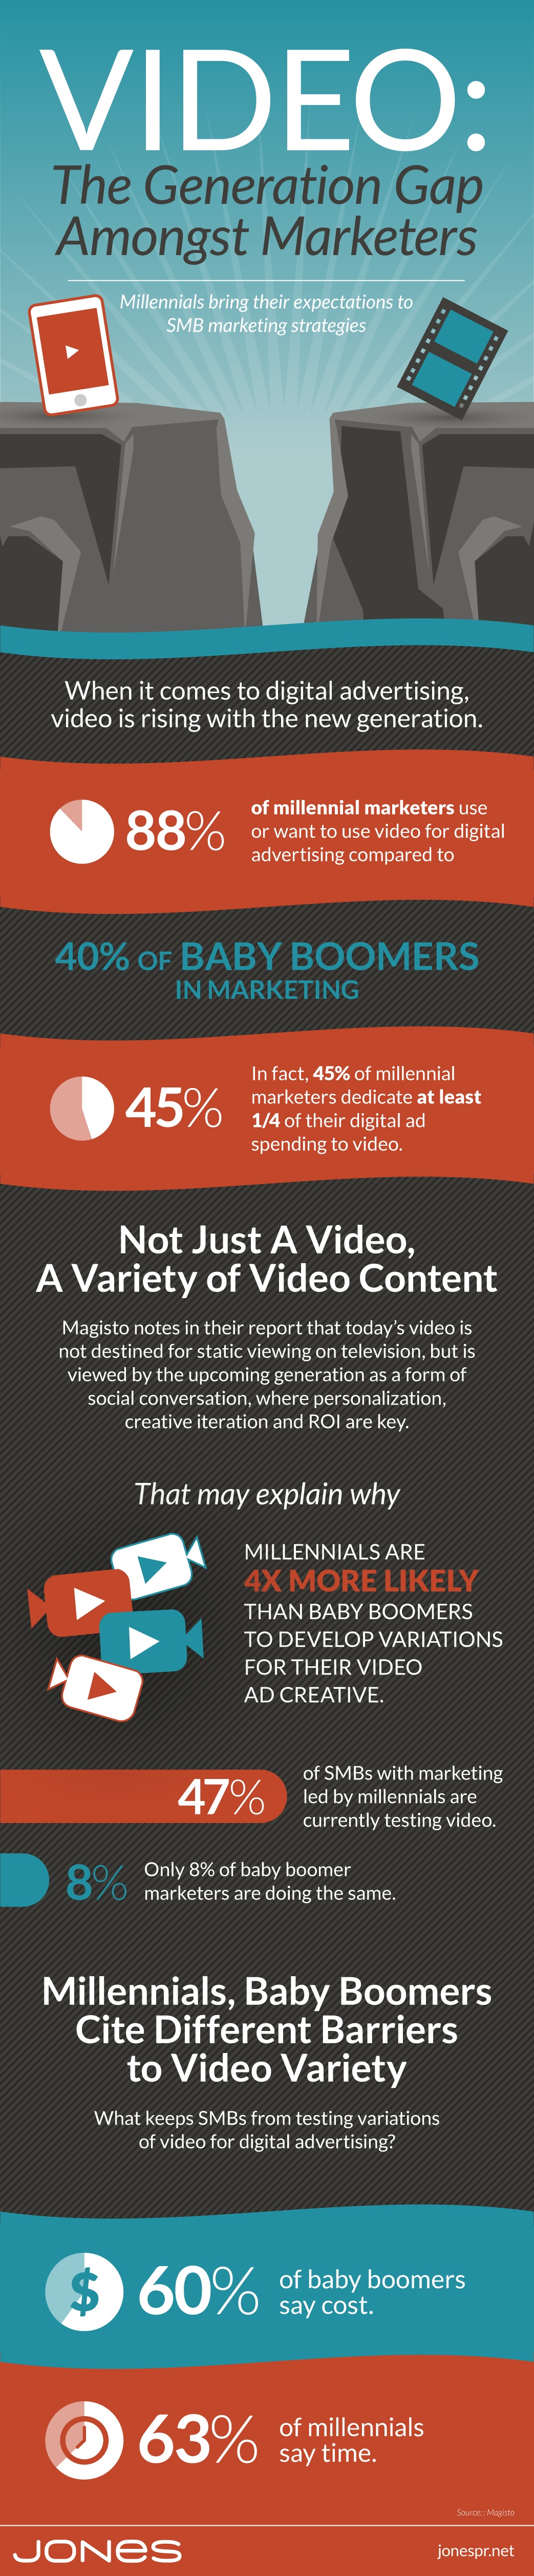 jones-infographic-millennials-video-marketing